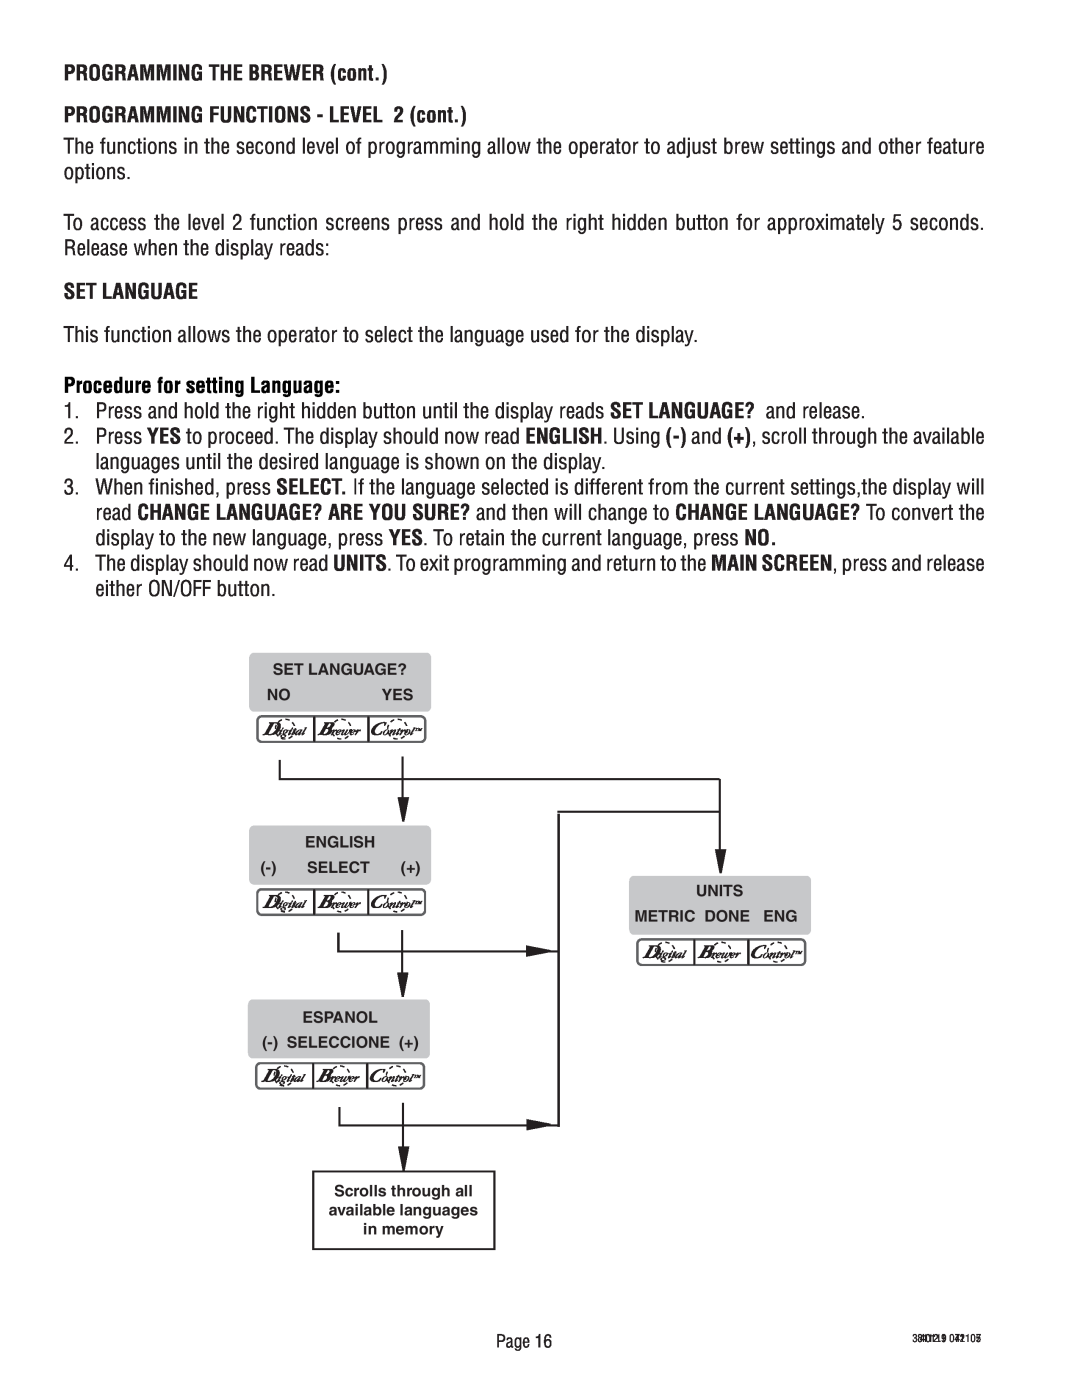 Bunn TITAN DUAL manual PROGRAMMING THE BREWER cont PROGRAMMING FUNCTIONS - LEVEL 2 cont, Set Language 